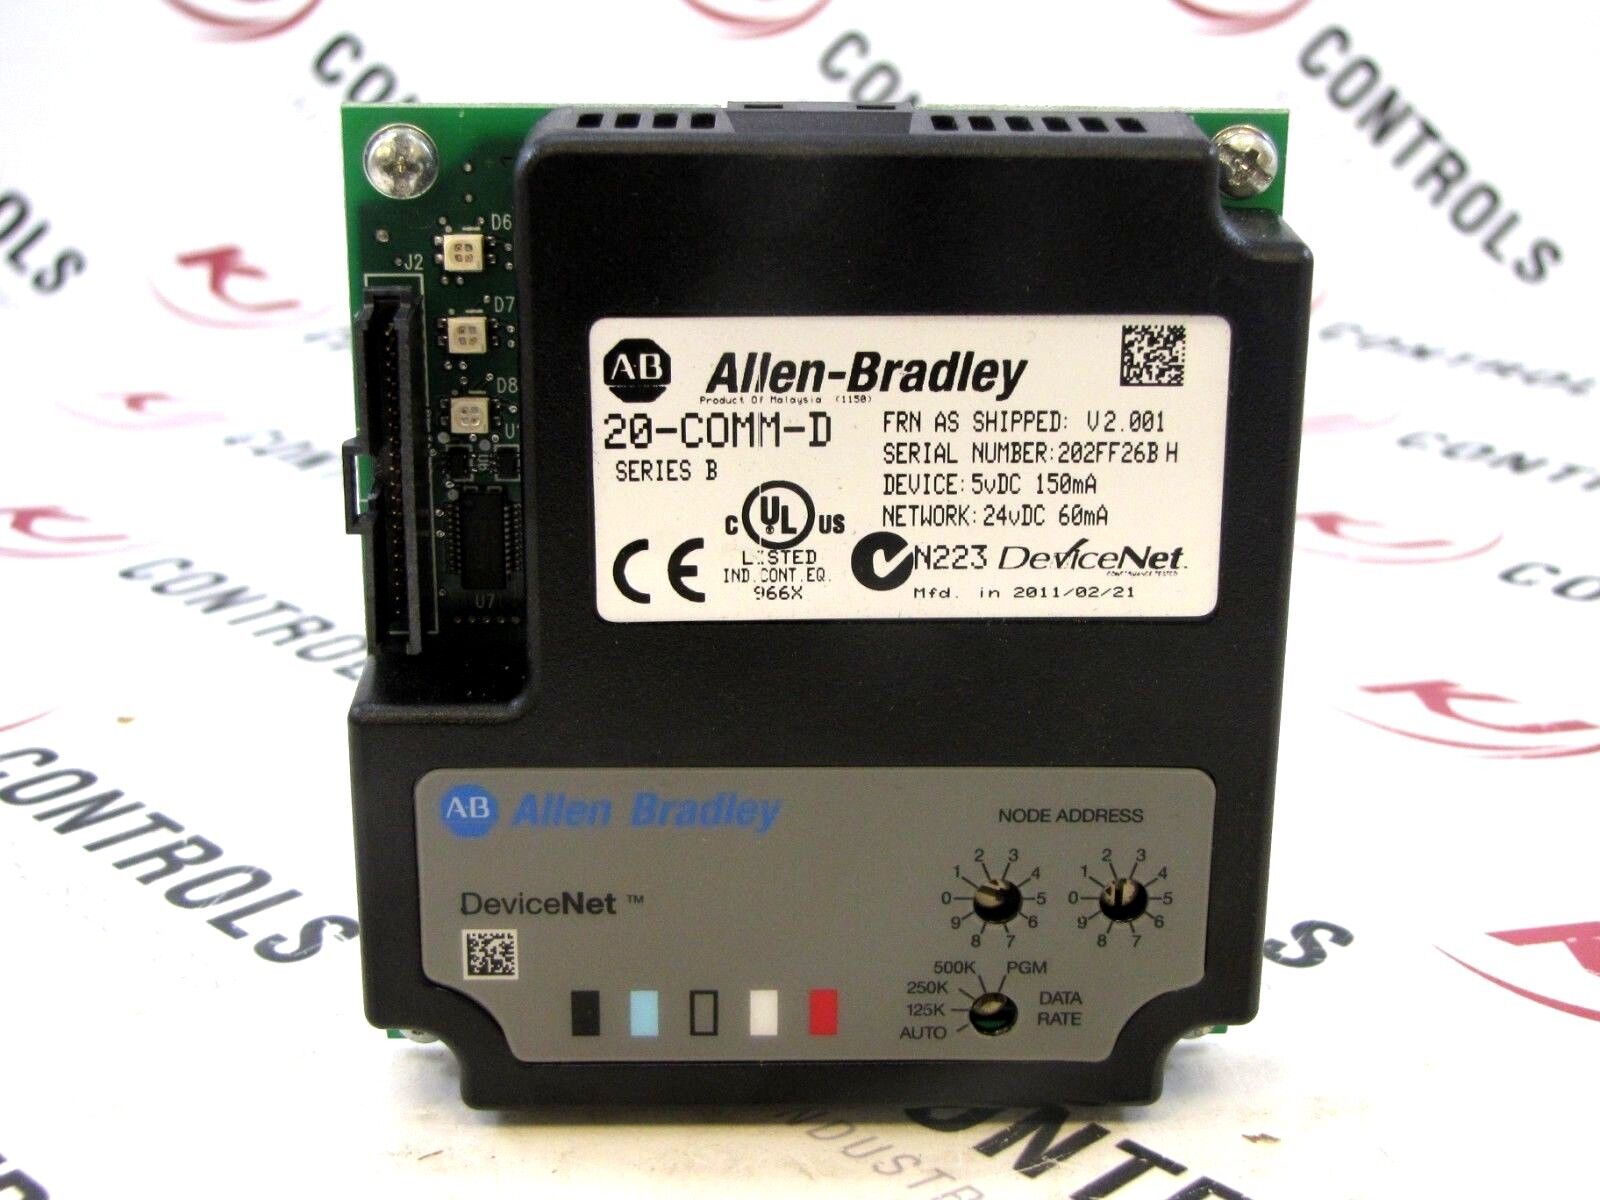 Allen-Bradley 20-COMM-D PowerFlex DeviceNet Communication Adapter